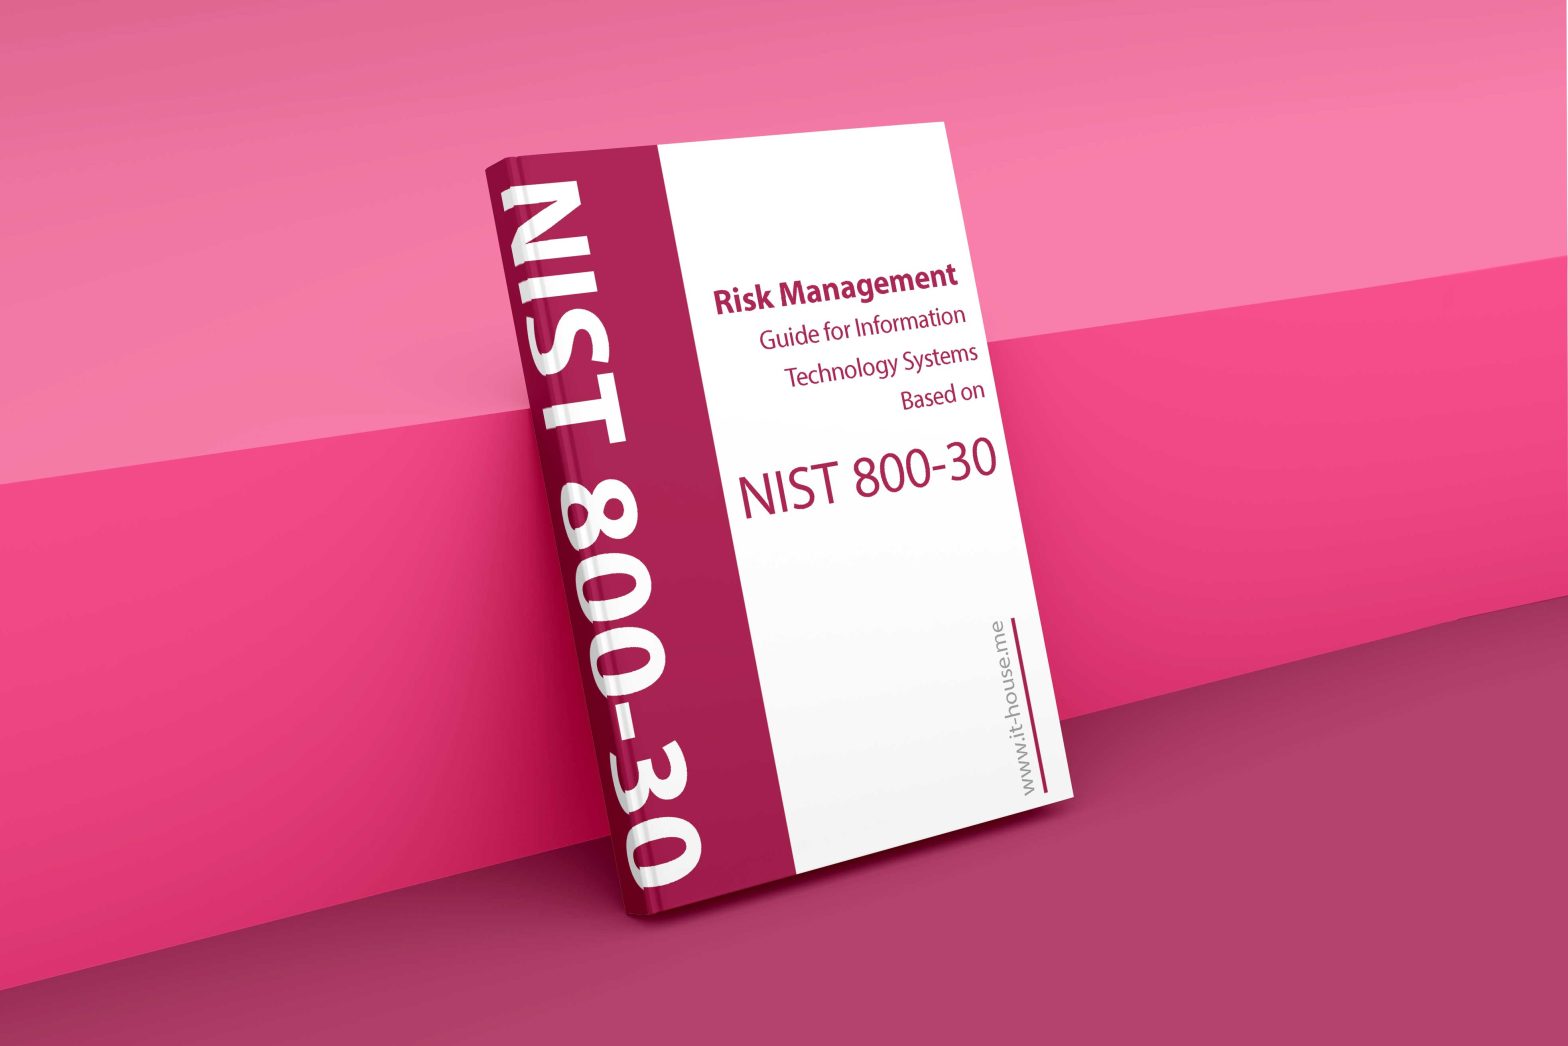 NIST 800-30